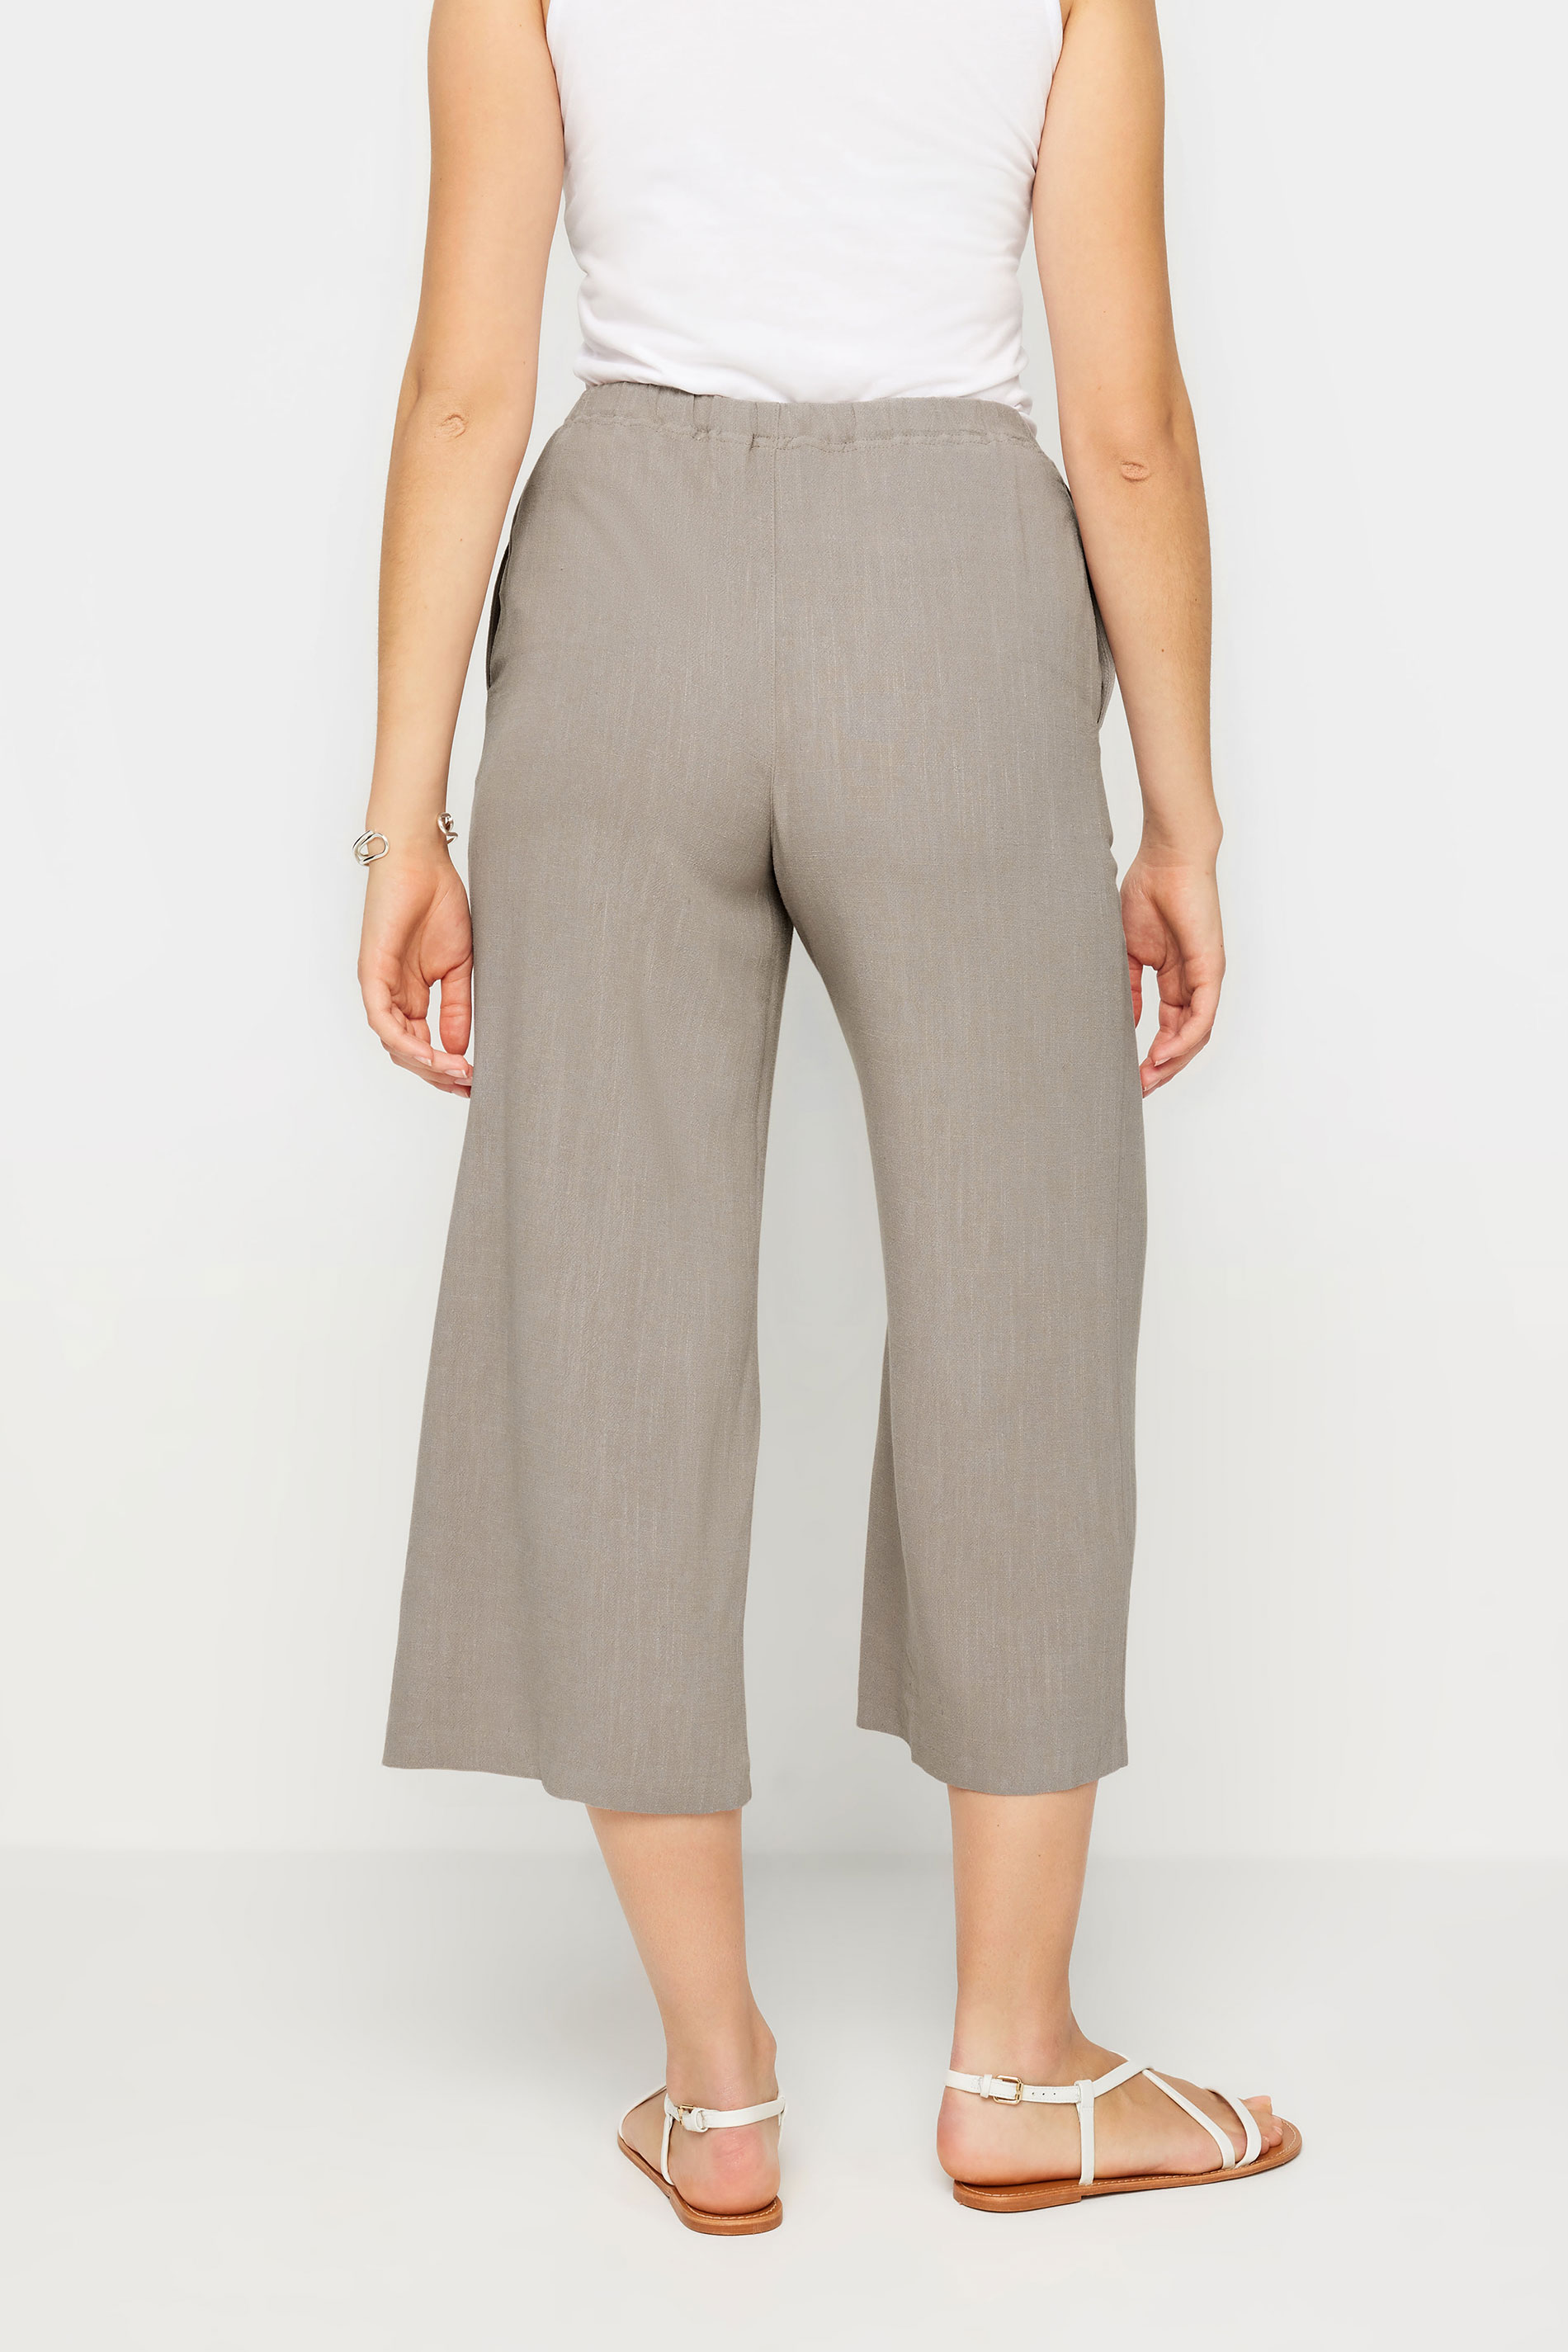 LTS Tall Women's Beige Brown Linen Tie Waist Cropped Trousers | Long Tall Sally  3